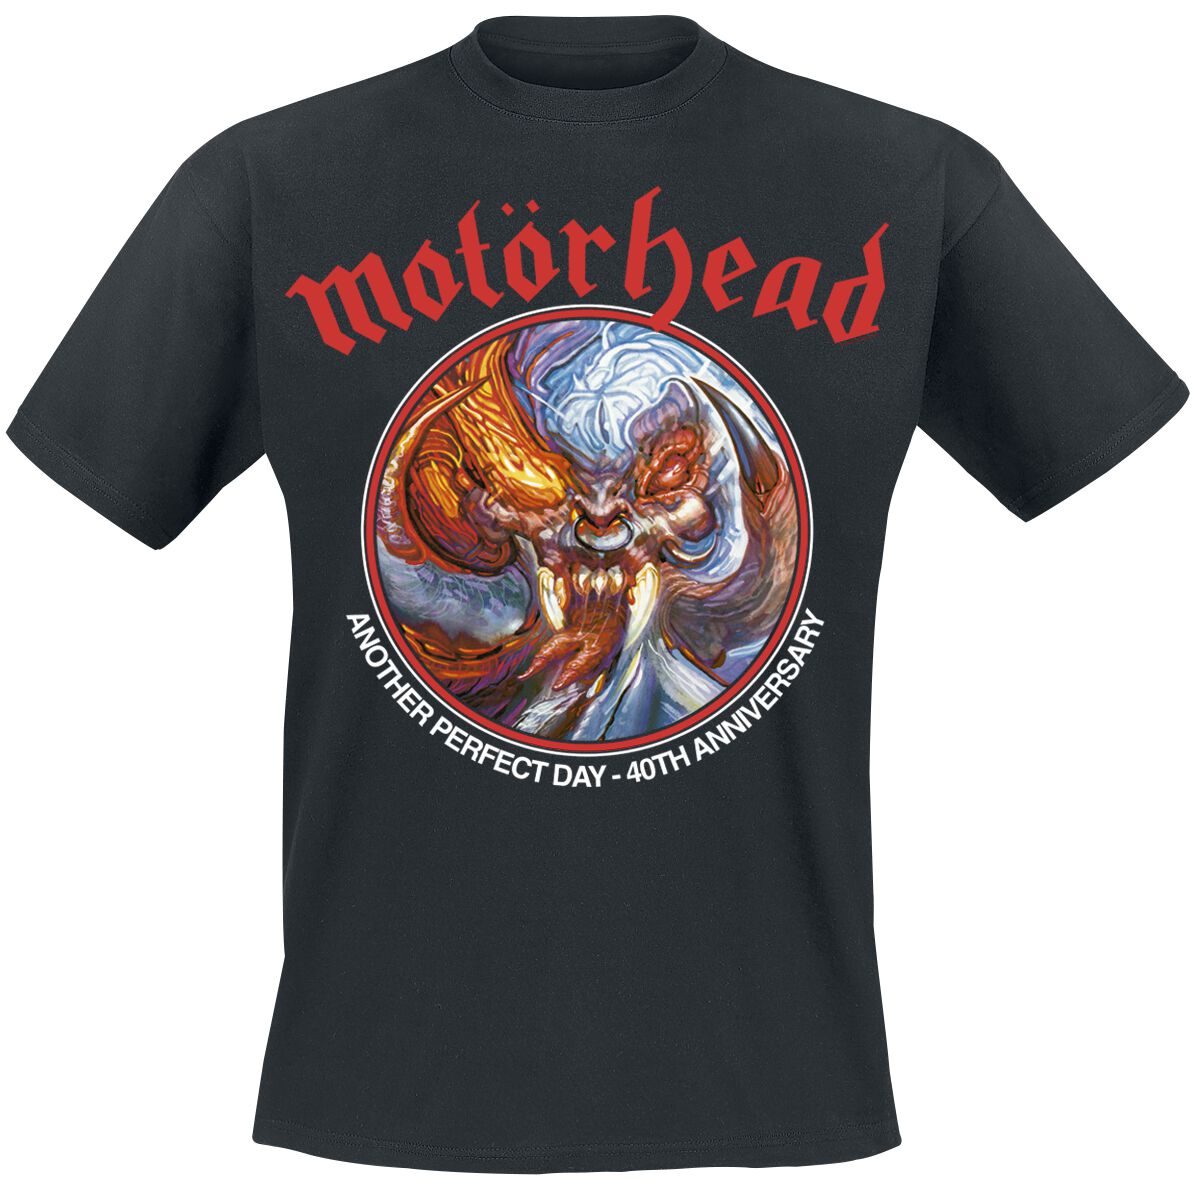 Motörhead Another Perfect Day Anniversary T-Shirt schwarz in 4XL